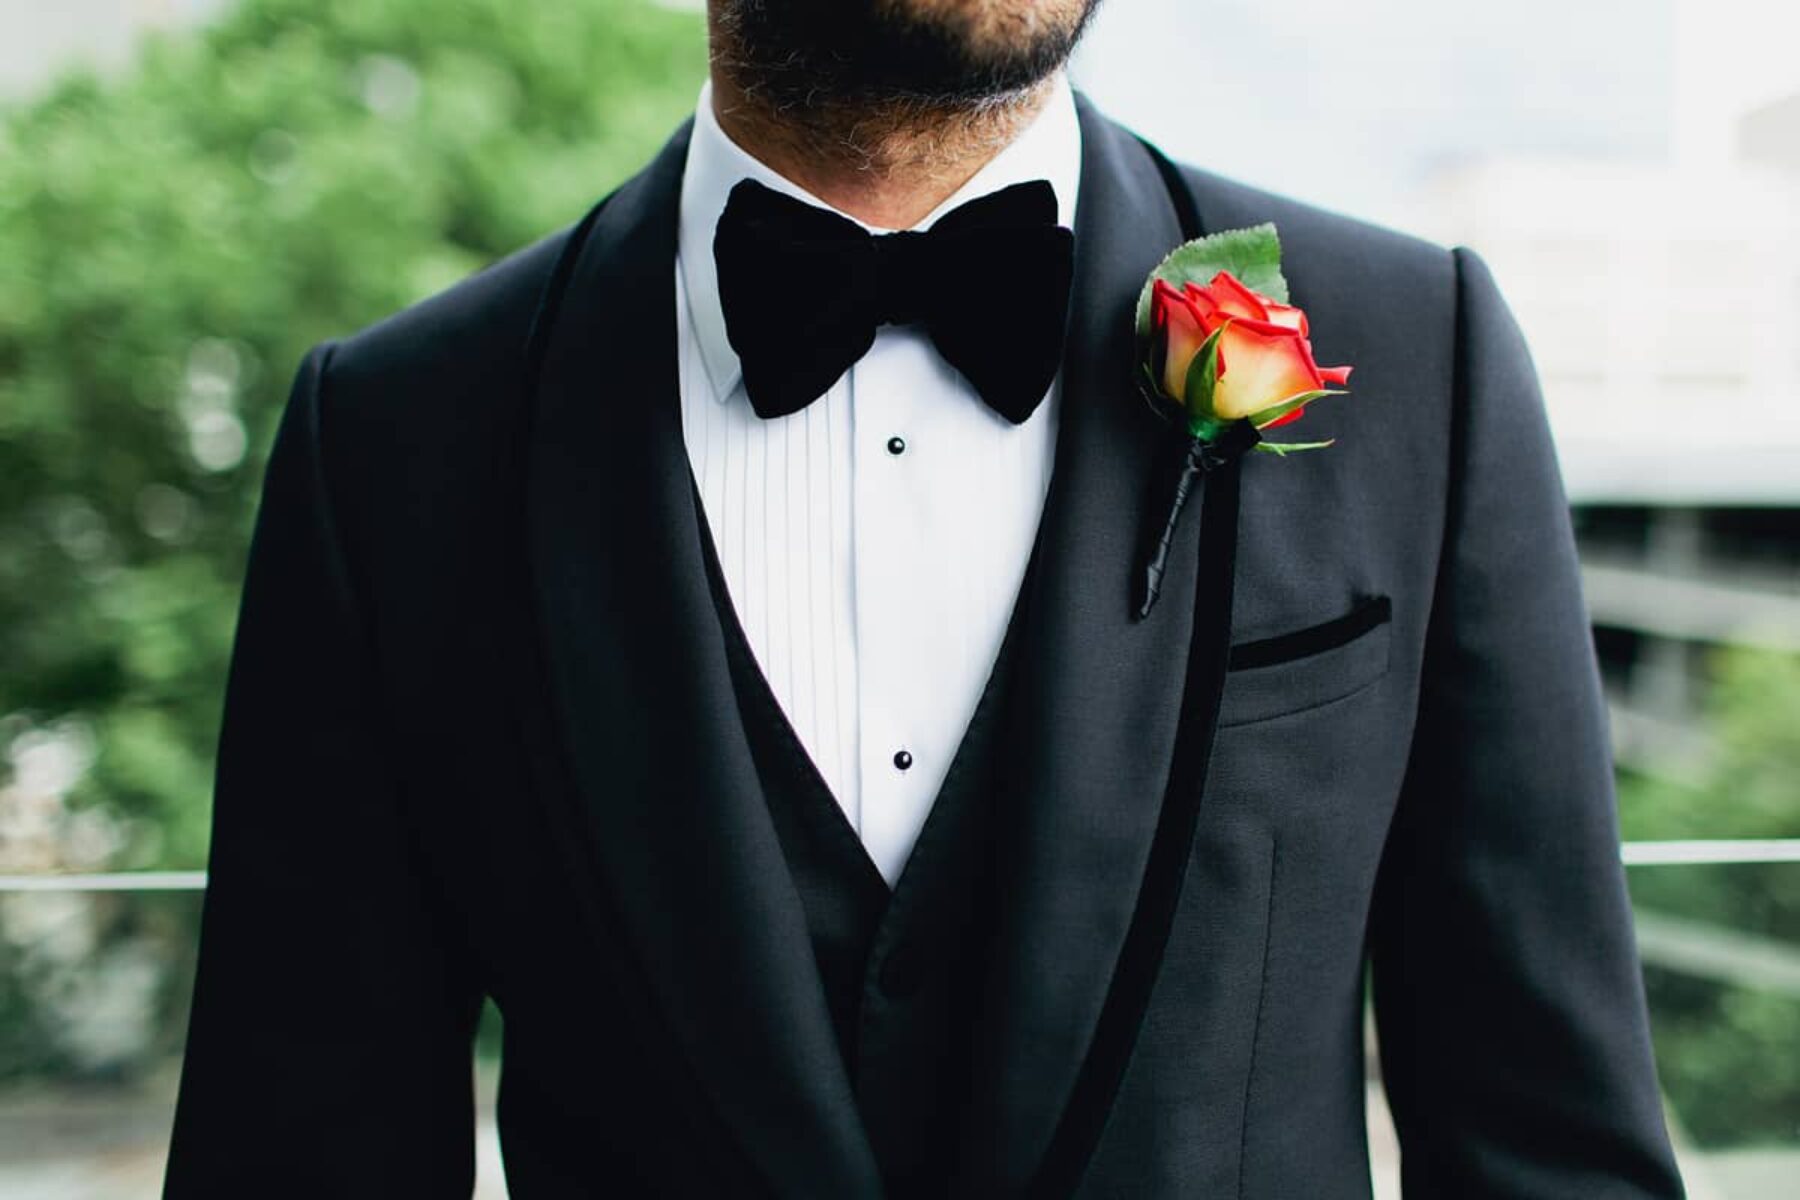 Dolce & Gabbana wedding tux and bow tie